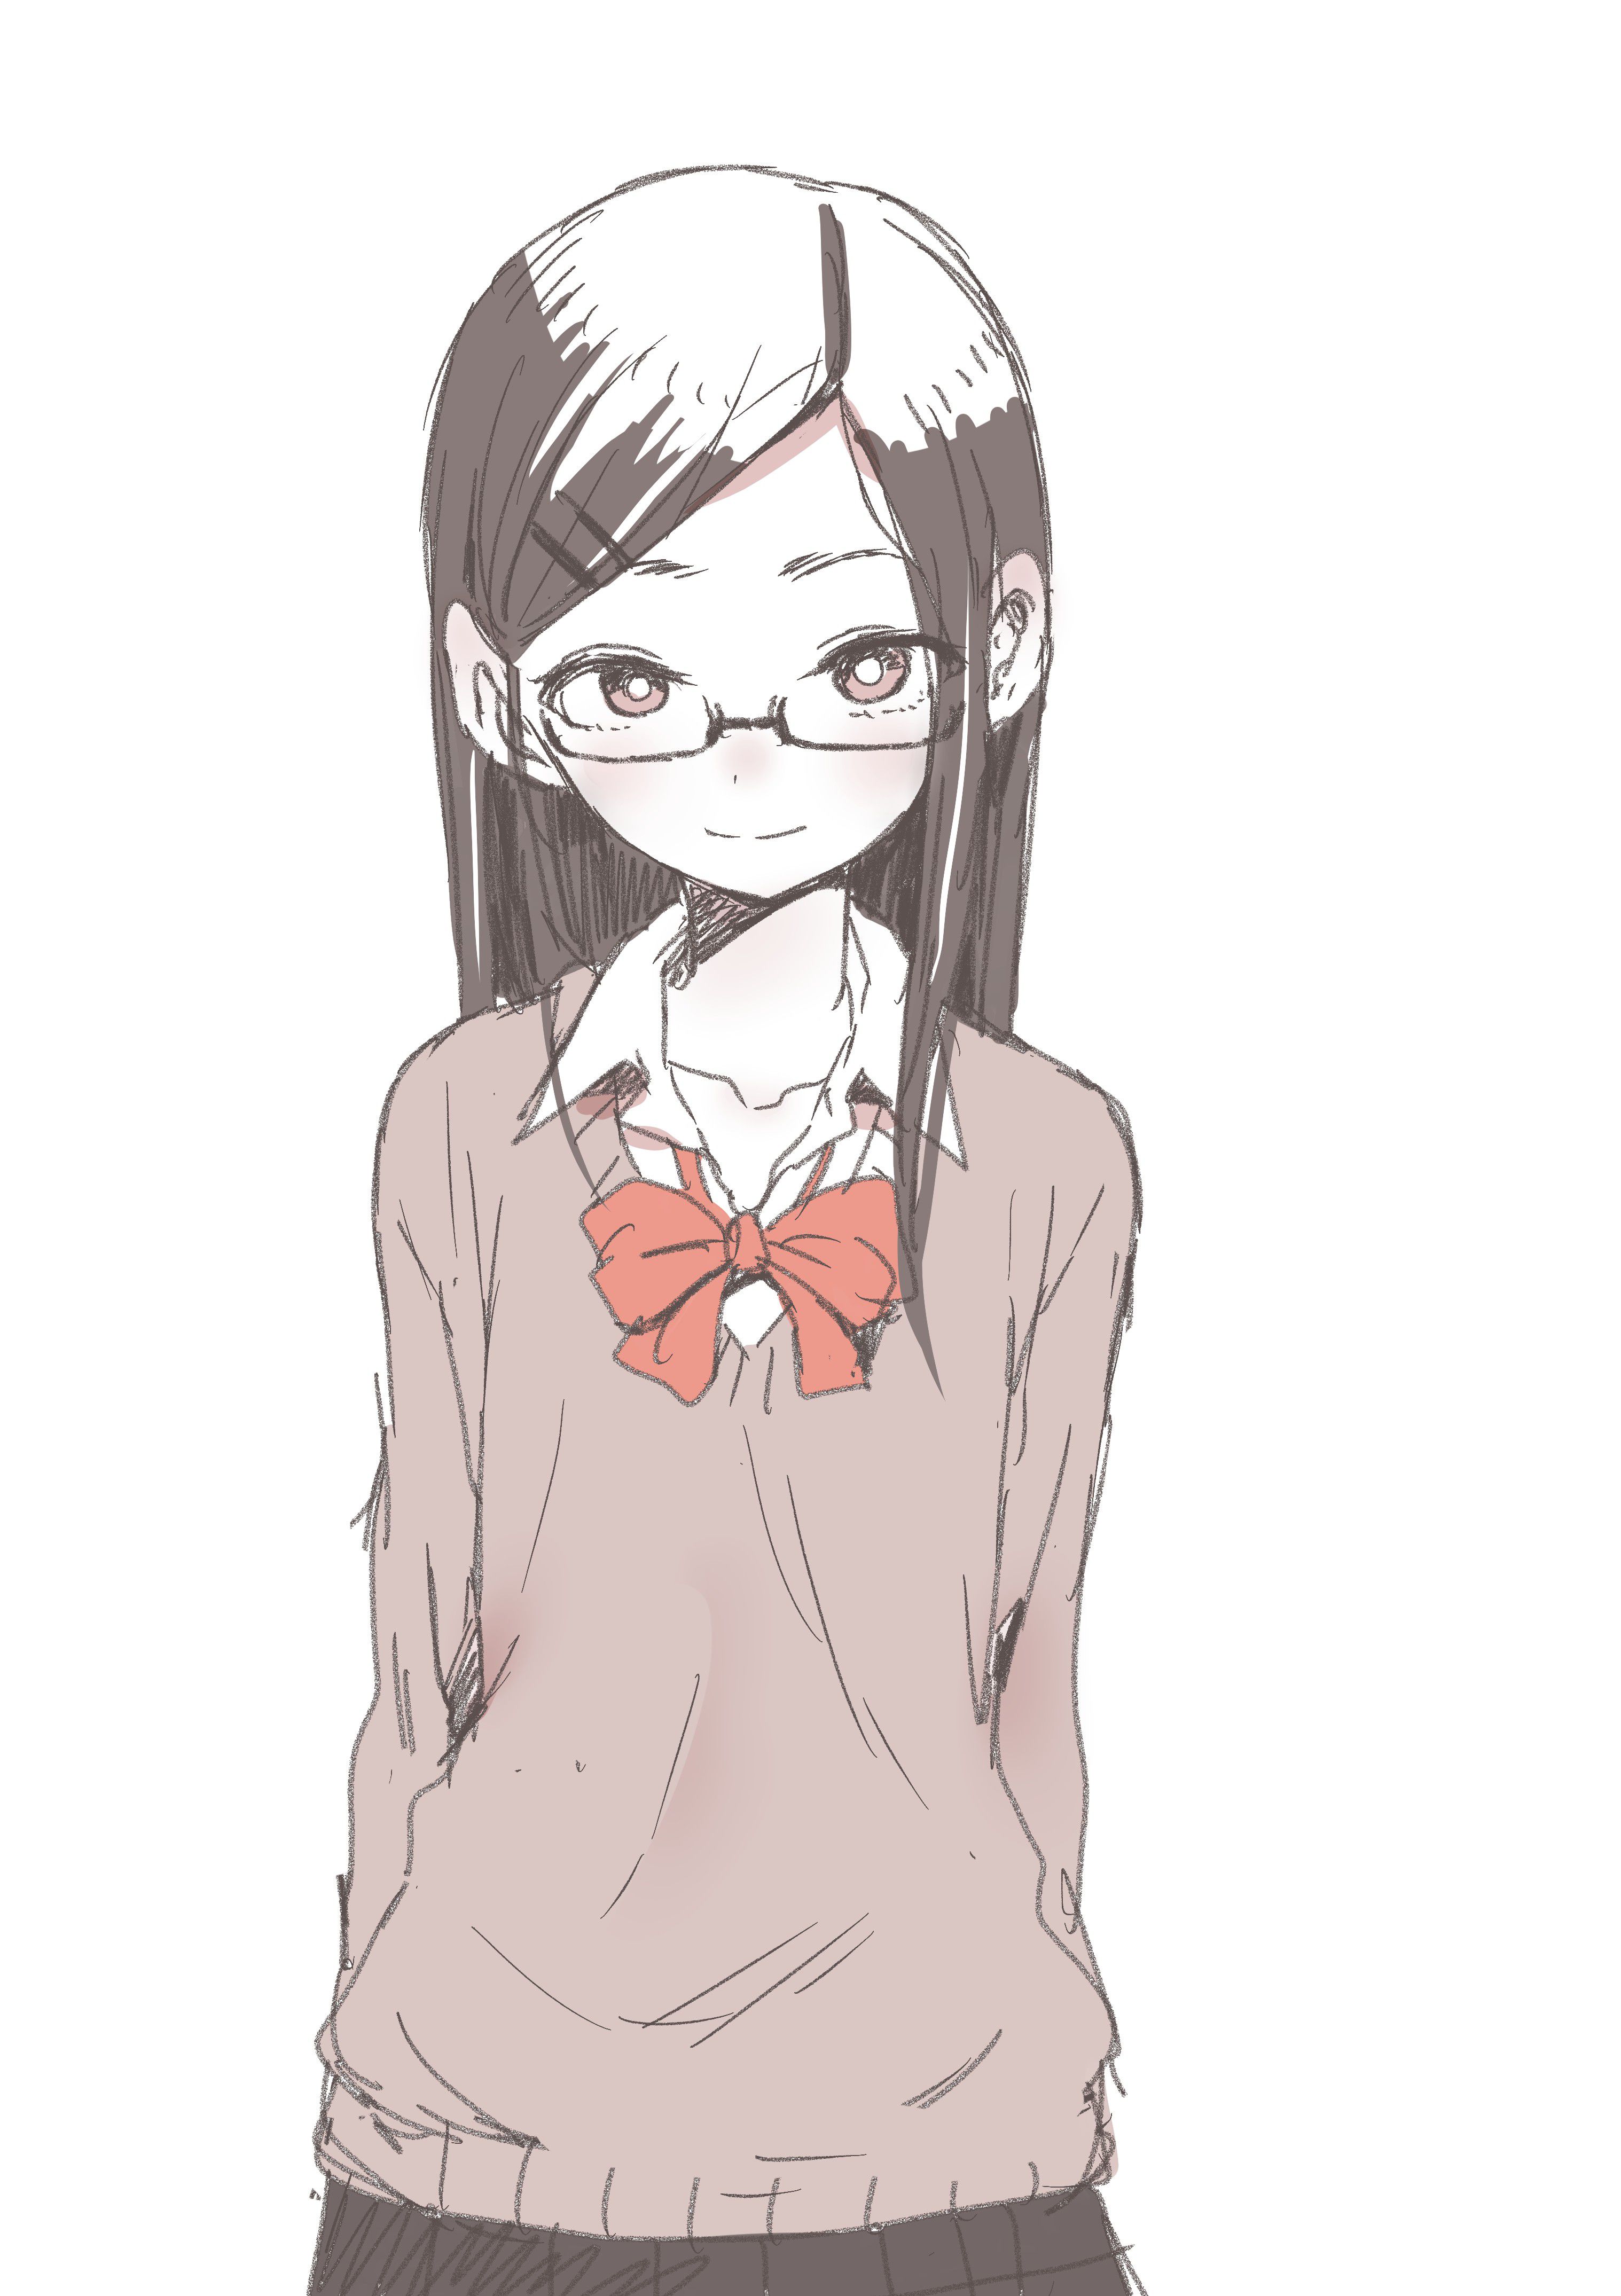 [Secondary] secondary image of a pretty girl wearing a school uniform Part 20 [uniform, non-erotic] 1